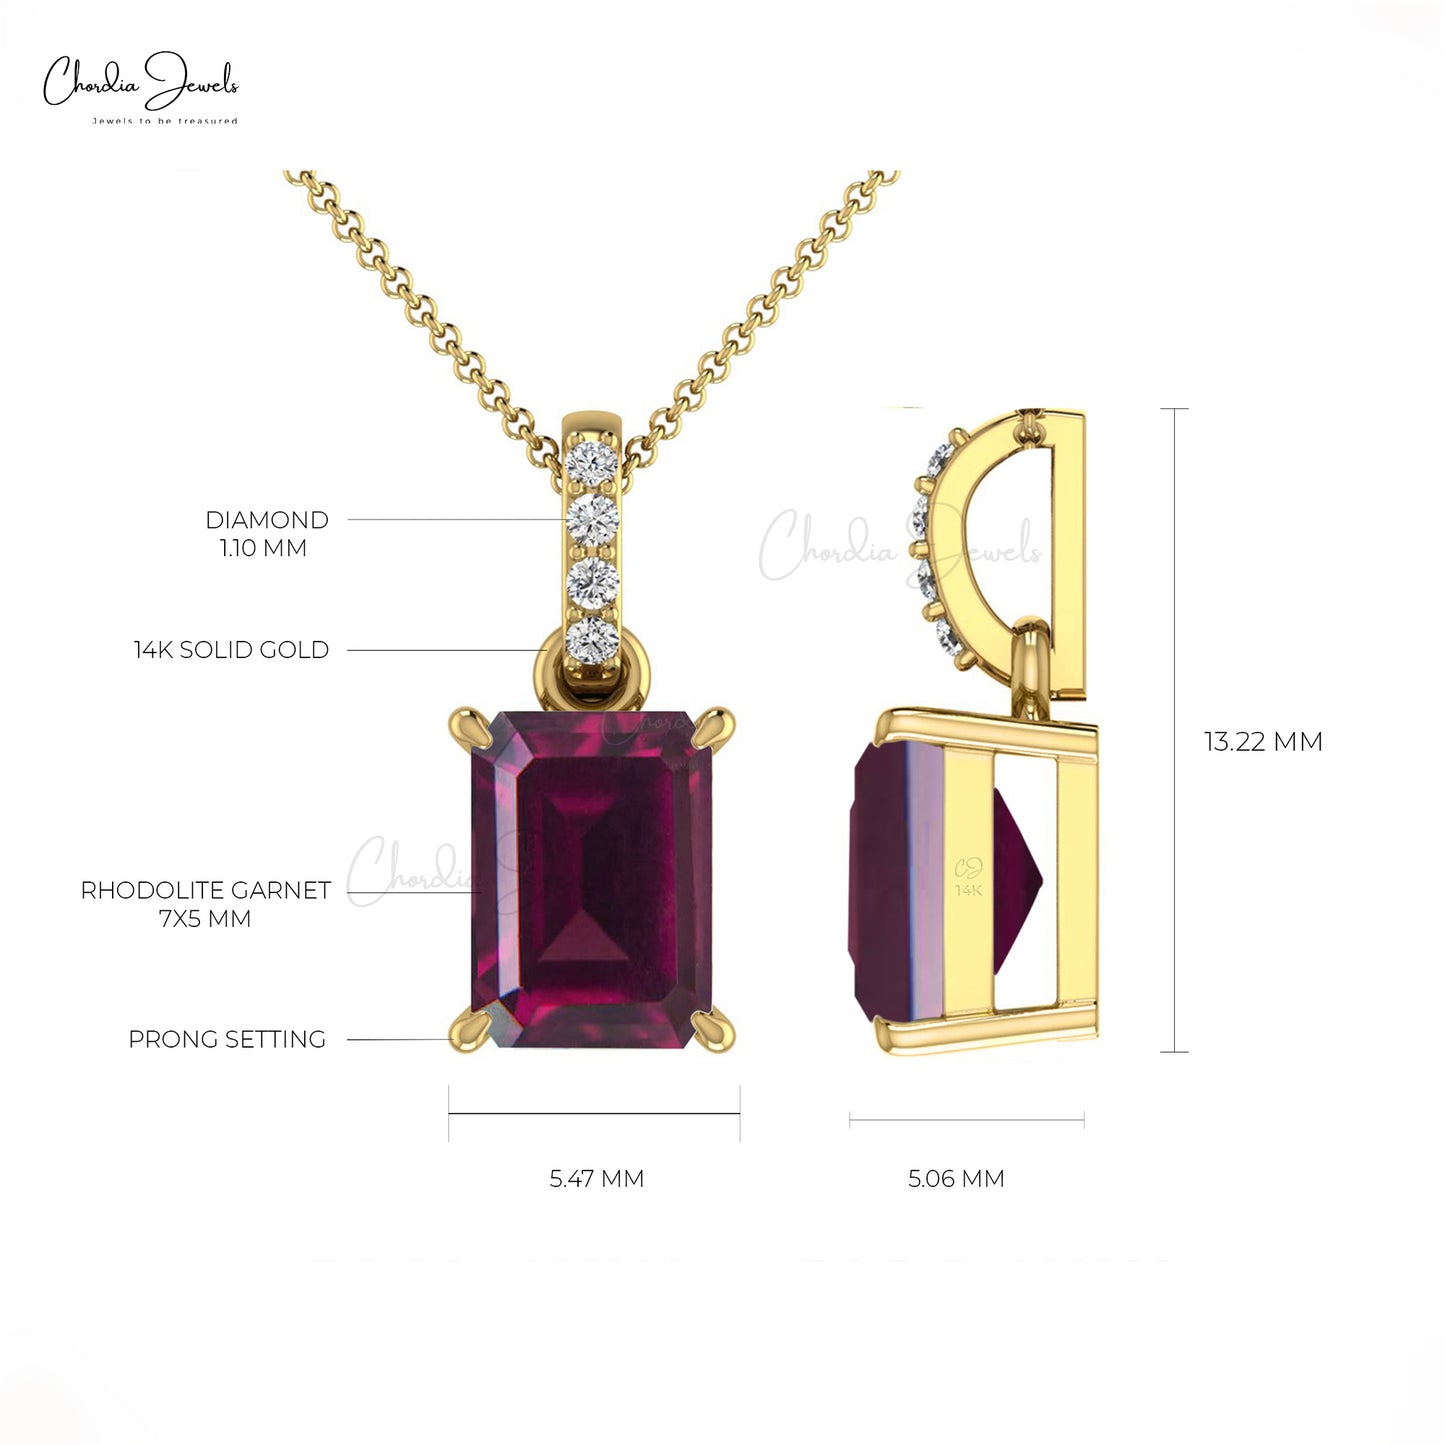 1.00 Cts Natural Rhodolite Garnet Pendant 14k Solid Gold Diamond Pendant 7X5mm Emerald Cut Gemstone Handmade Pendant For Women